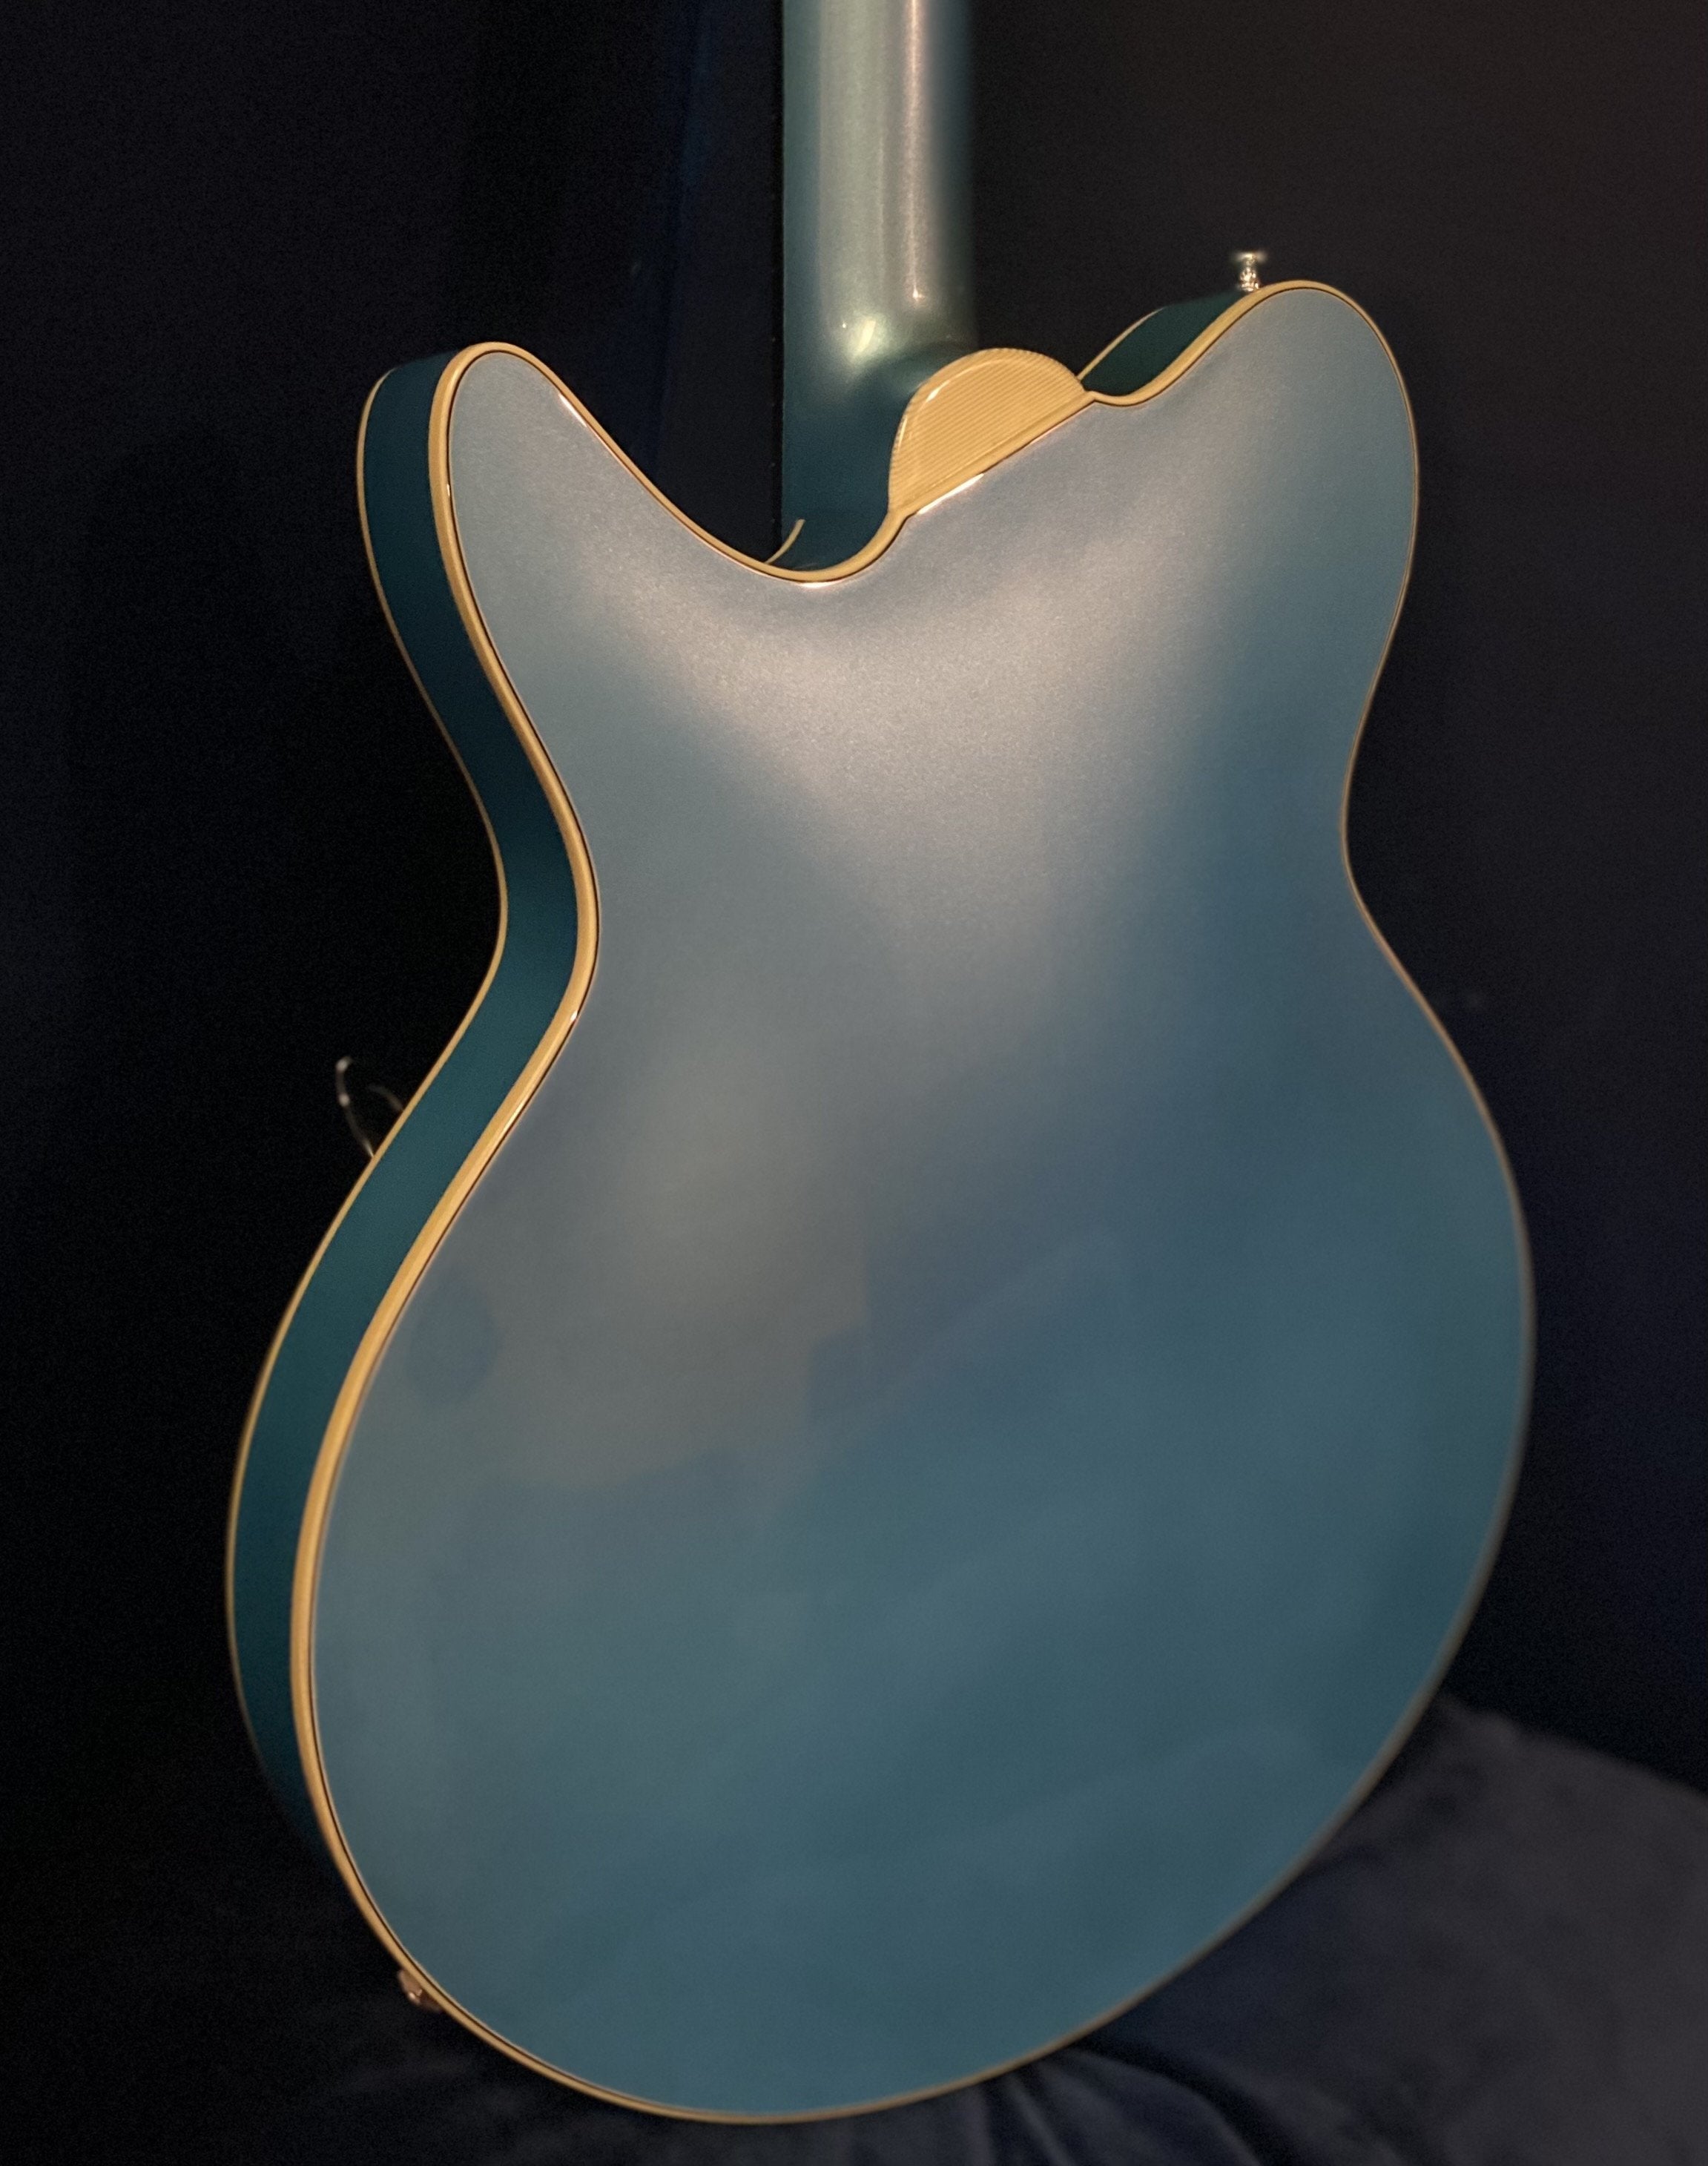 Eastman Romeo LA Celestine Blue, Electric Guitar for sale at Richards Guitars.